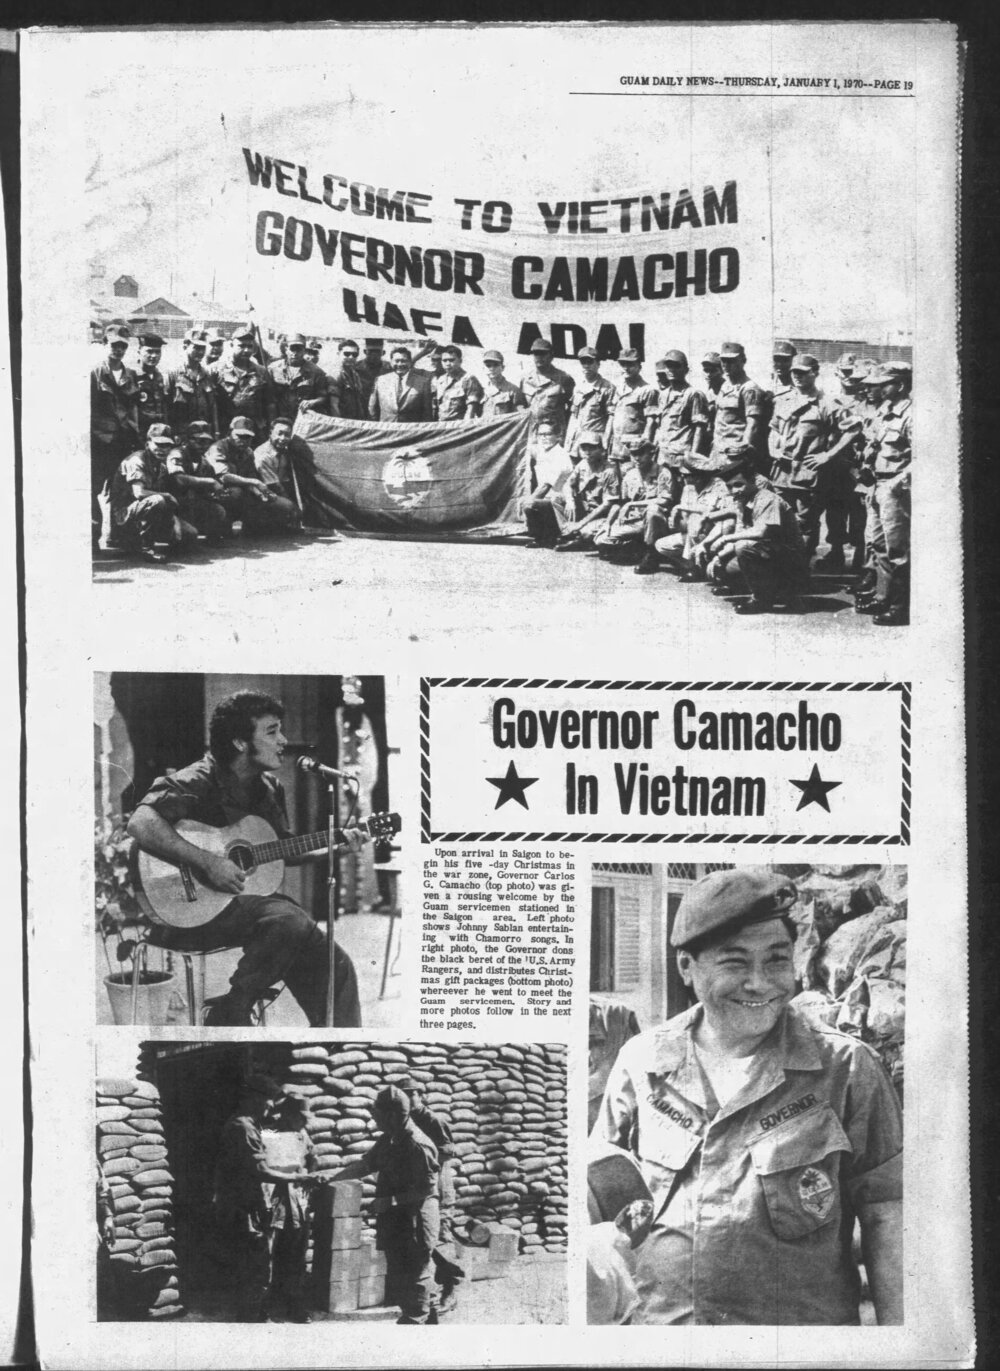 Guam Daily News_Jan 1 1970_Pg 19